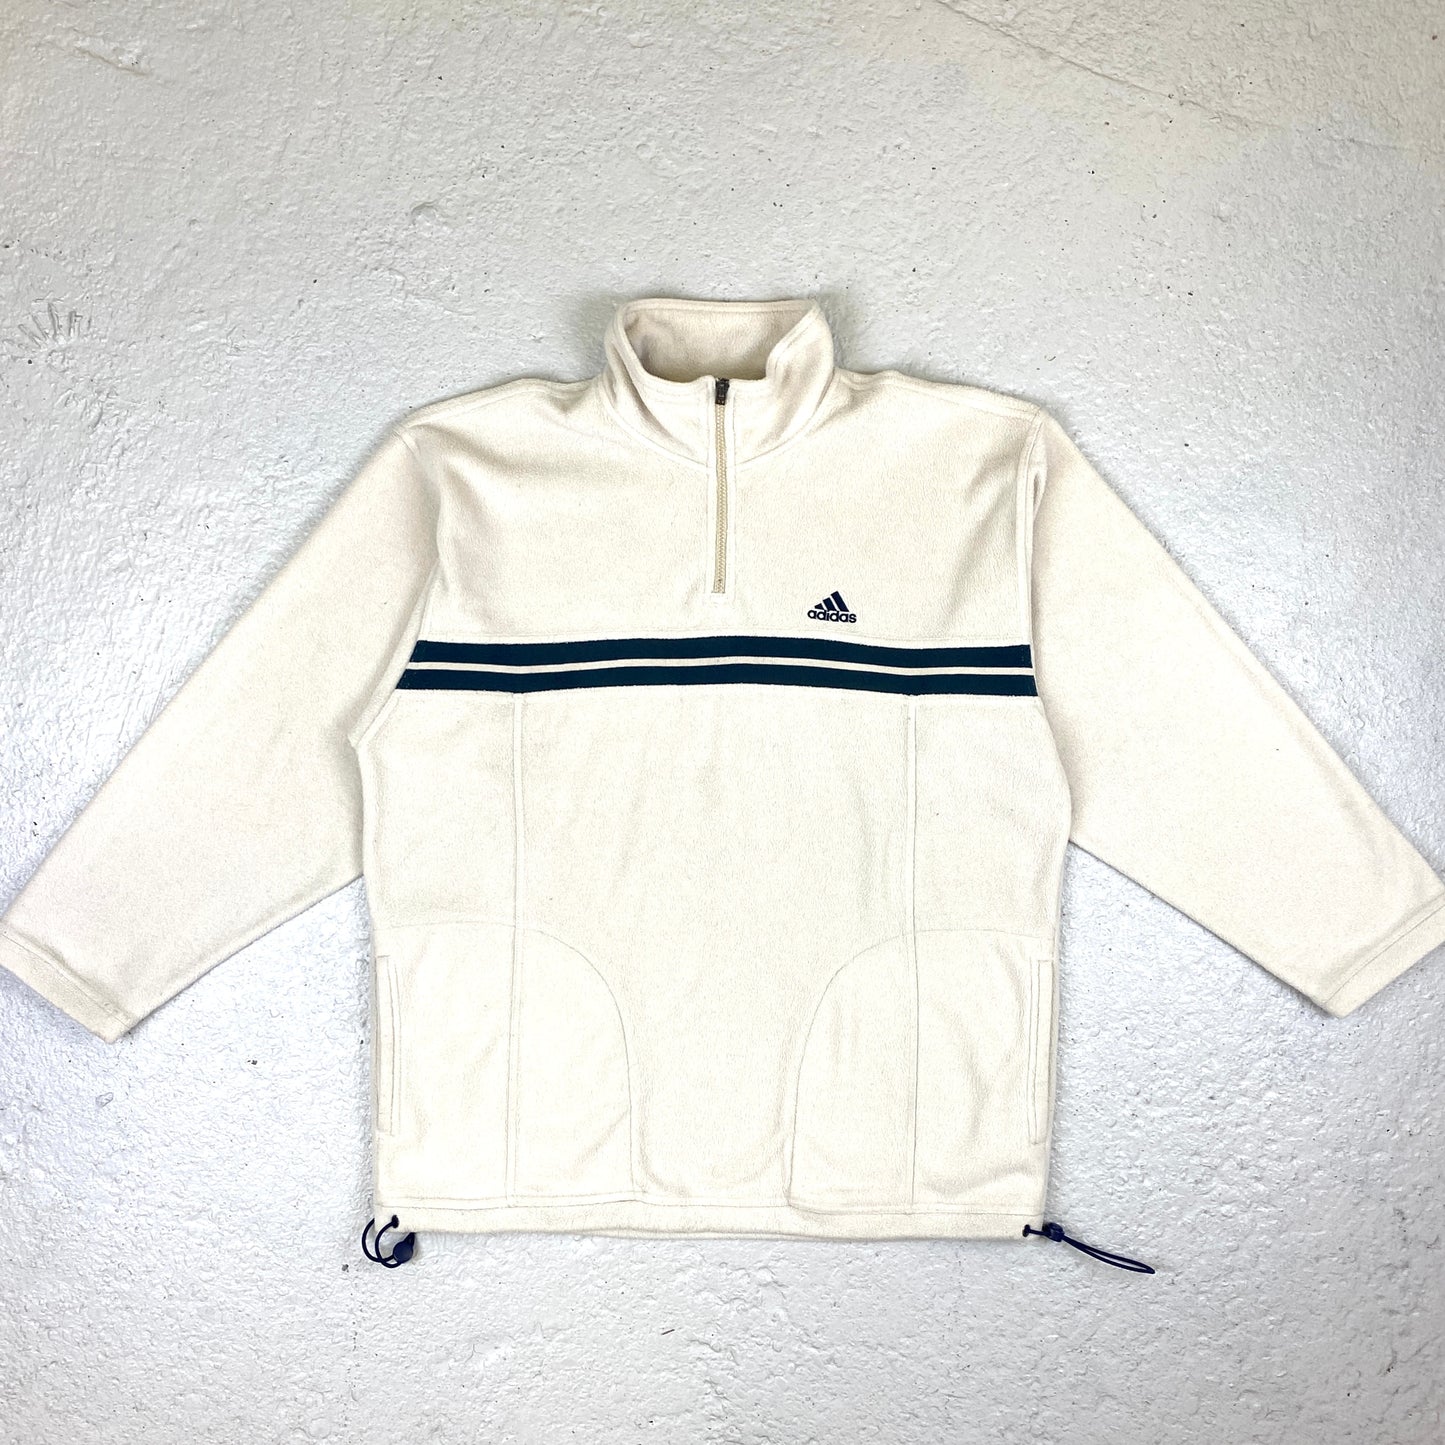 Adidas embroidered 1/4 zip fleece sweater (XL-XXL)